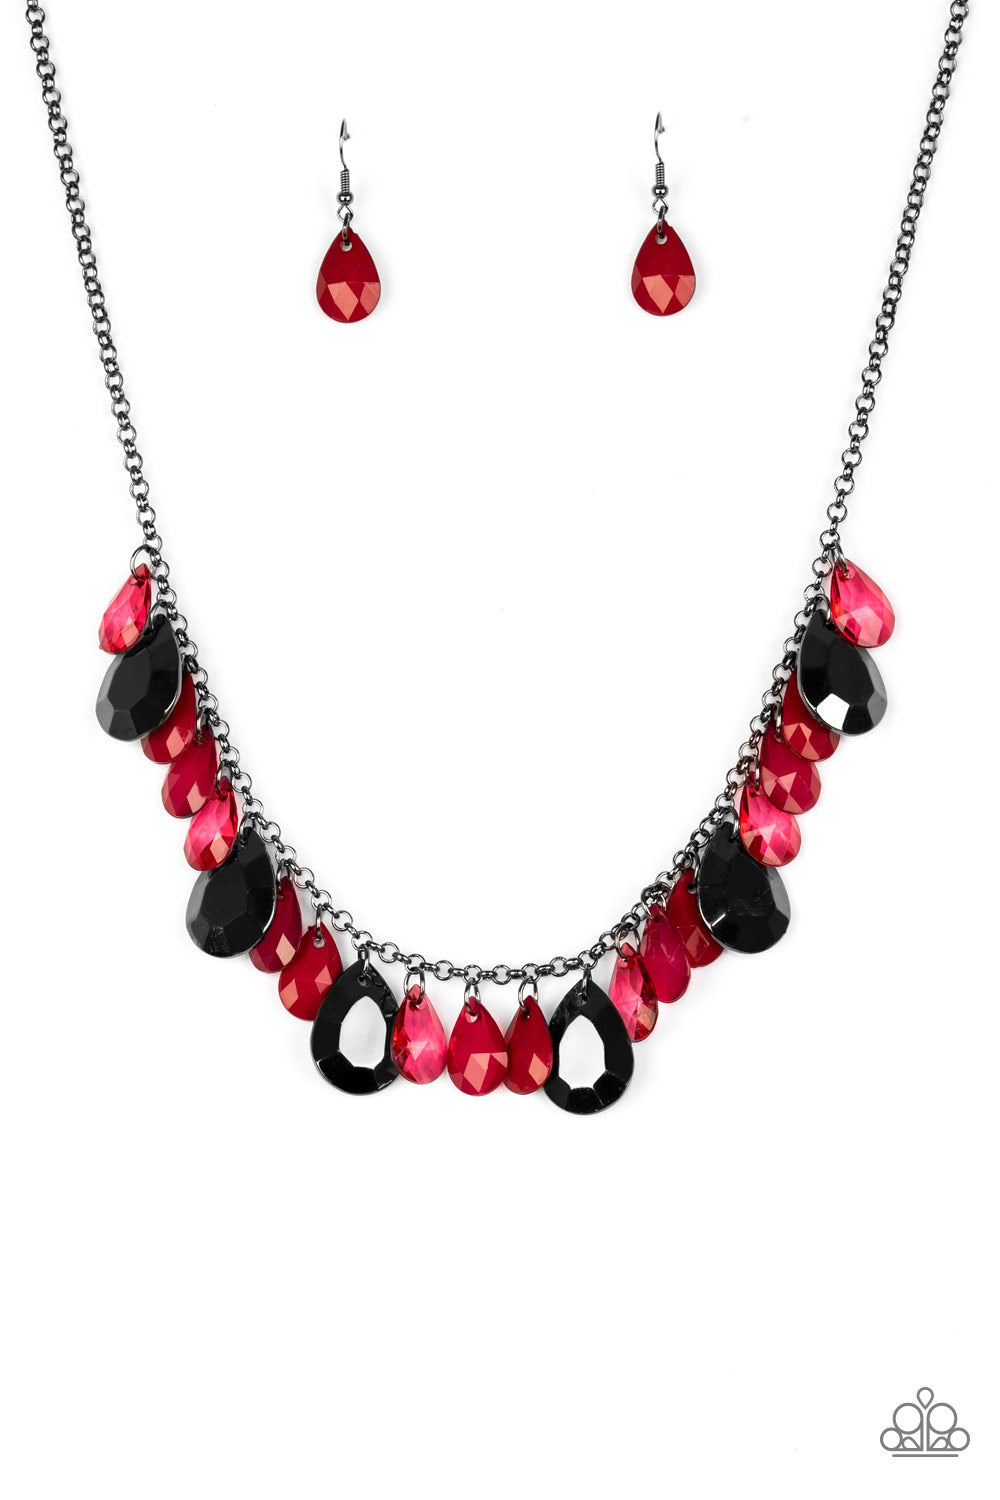 Hurricane Season Red Necklace - Paparazzi Accessories